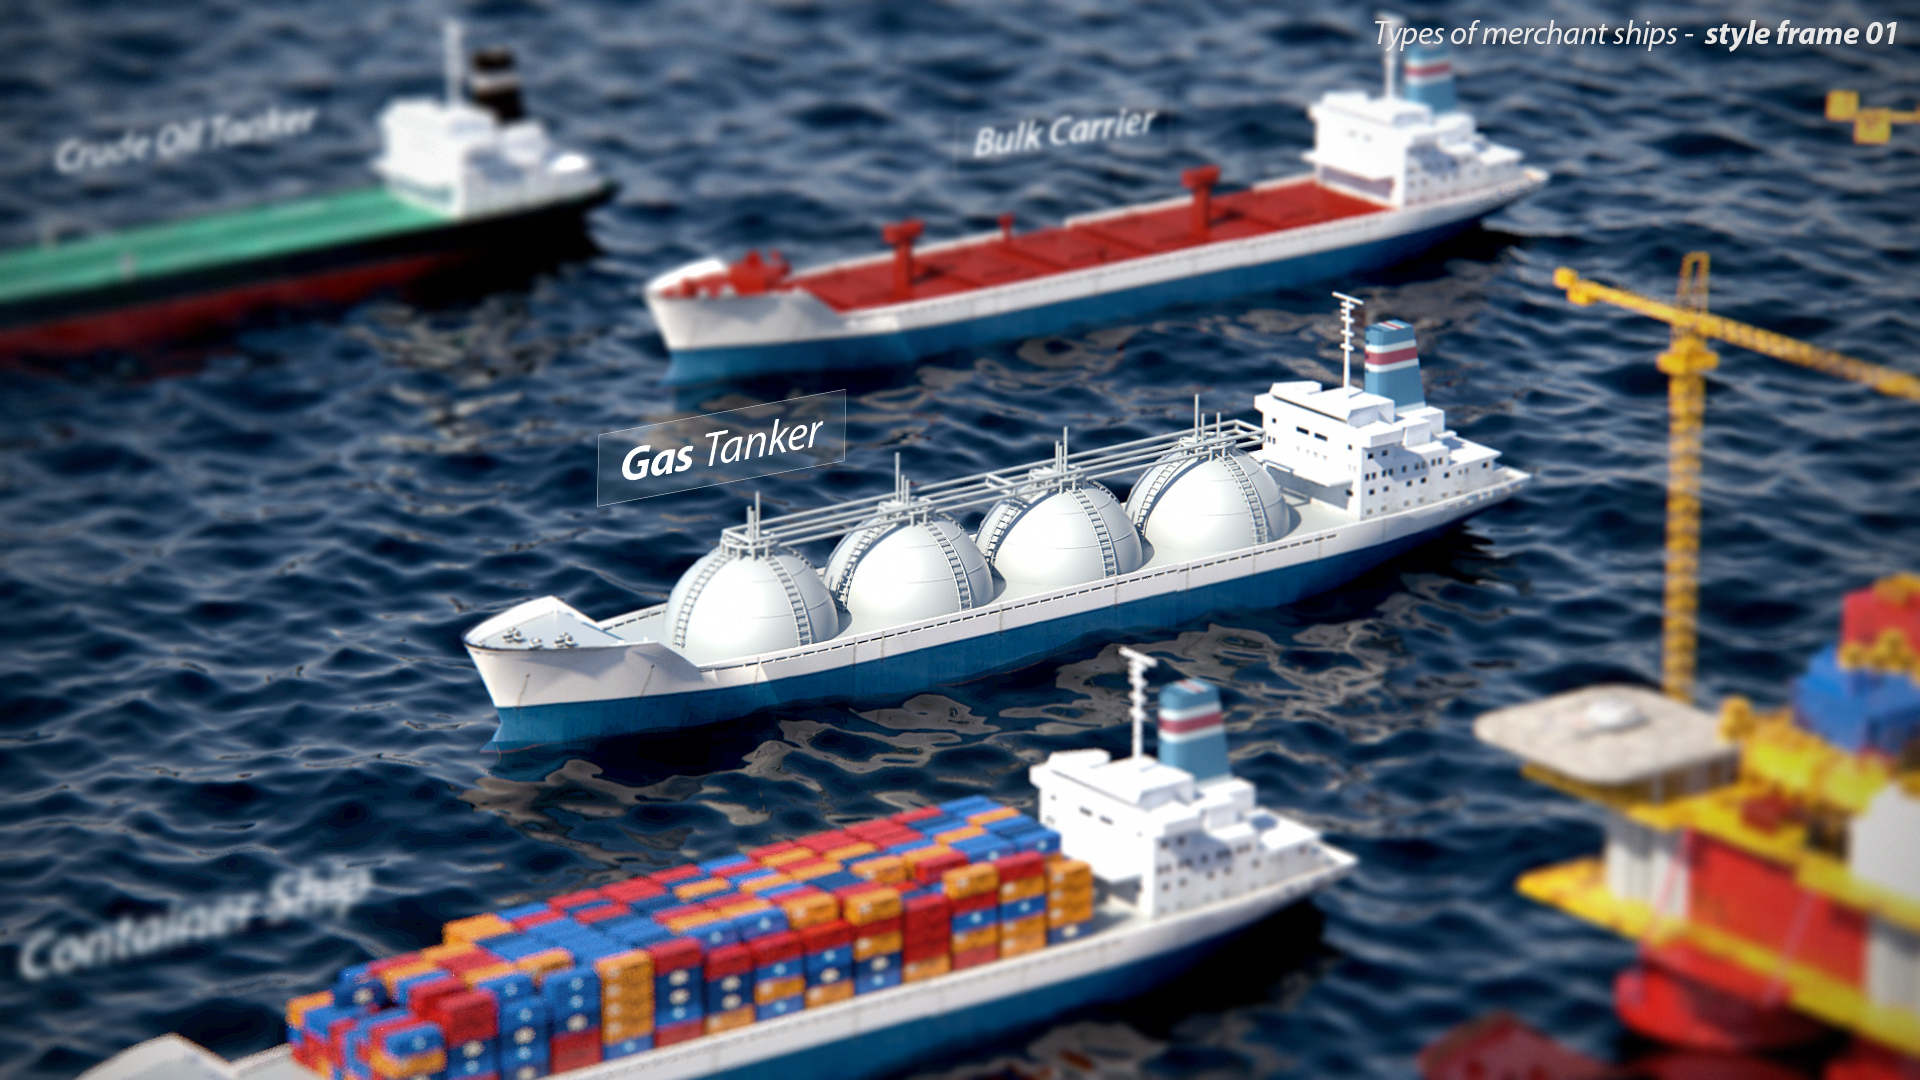 CG Vessels